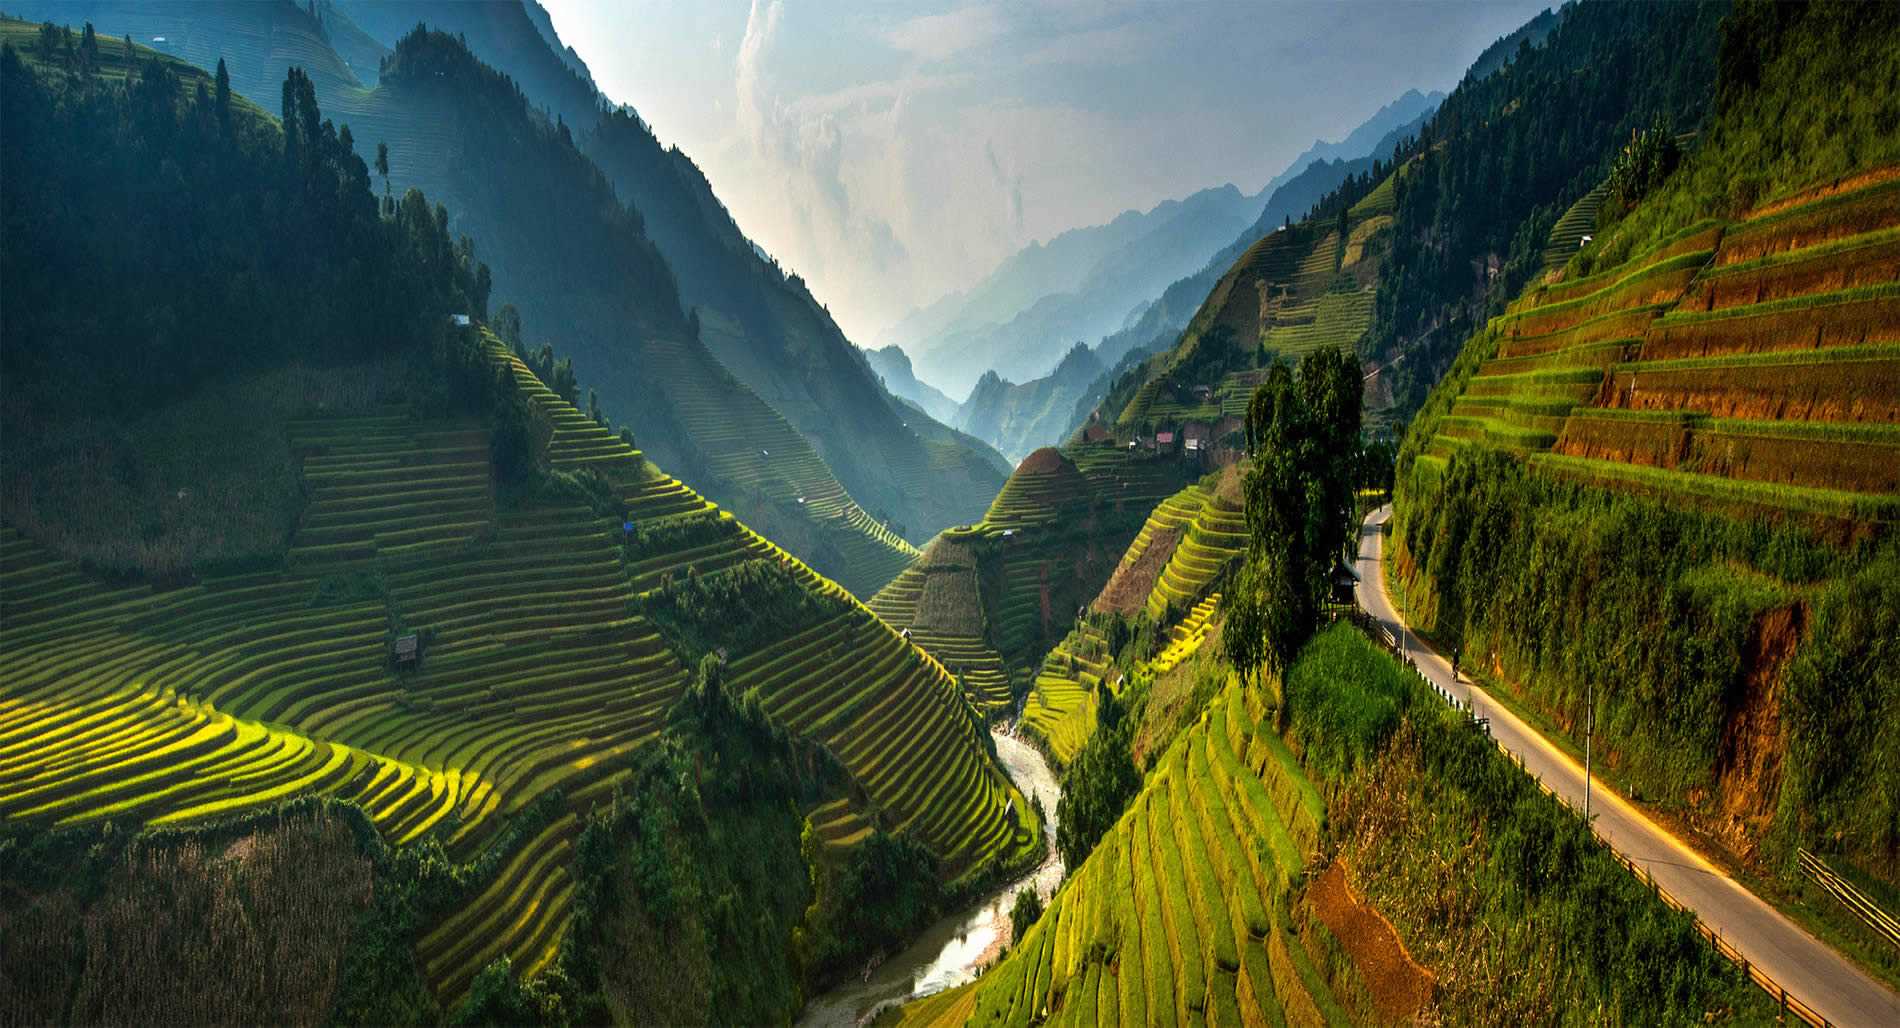 Get Visa And Take A Tour To Vietnam